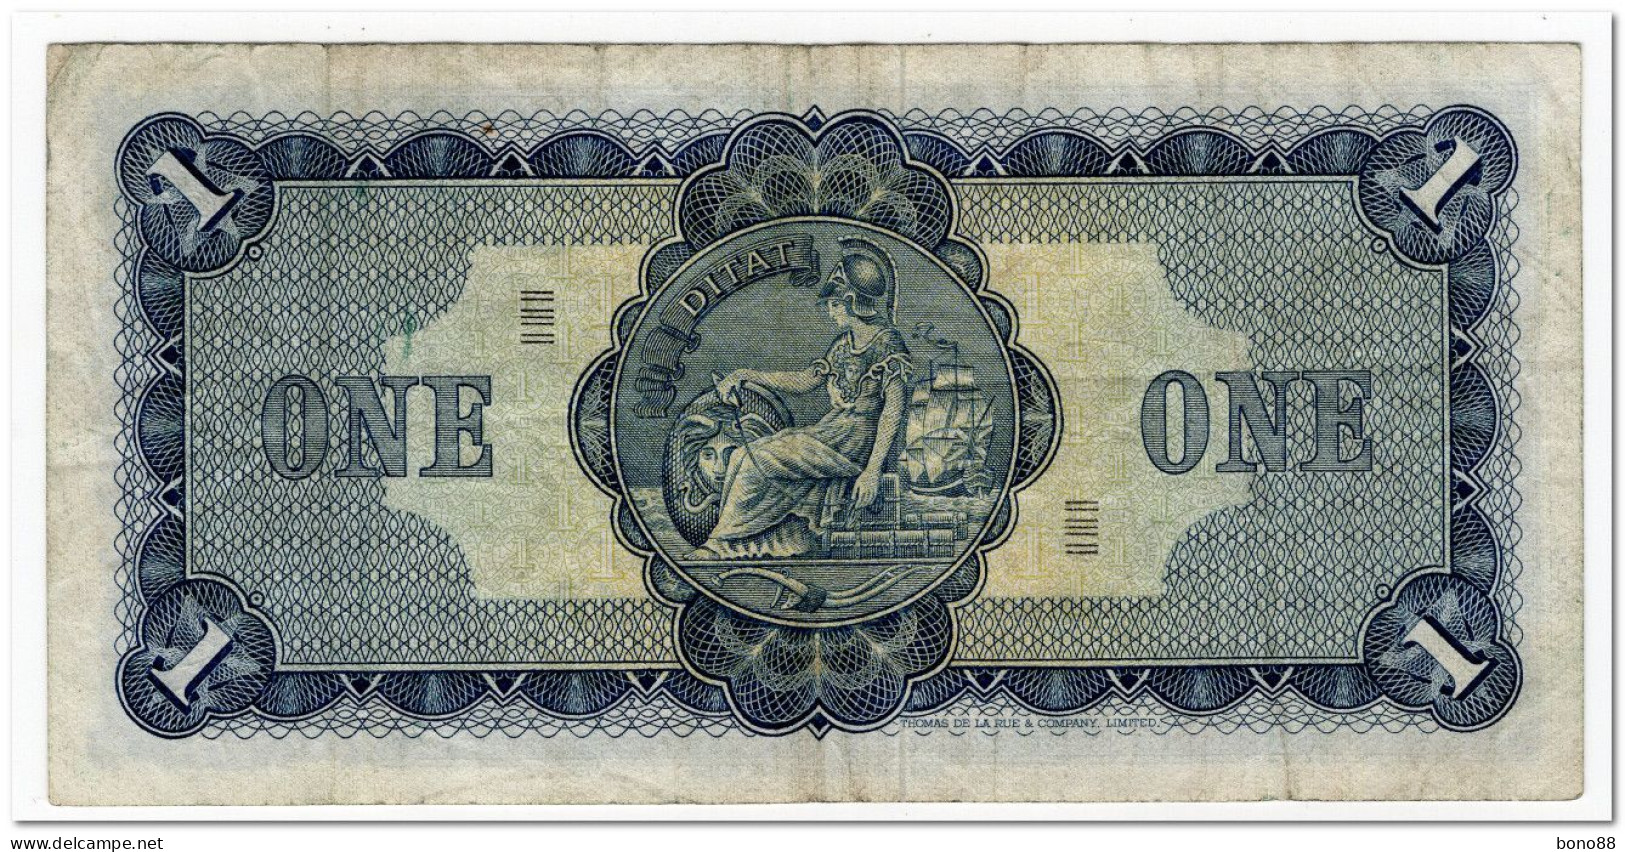 SCOTLAND,THE BRITISH LINEN BANK,1 POUND,1969,P.169a,F-VF - 1 Pound